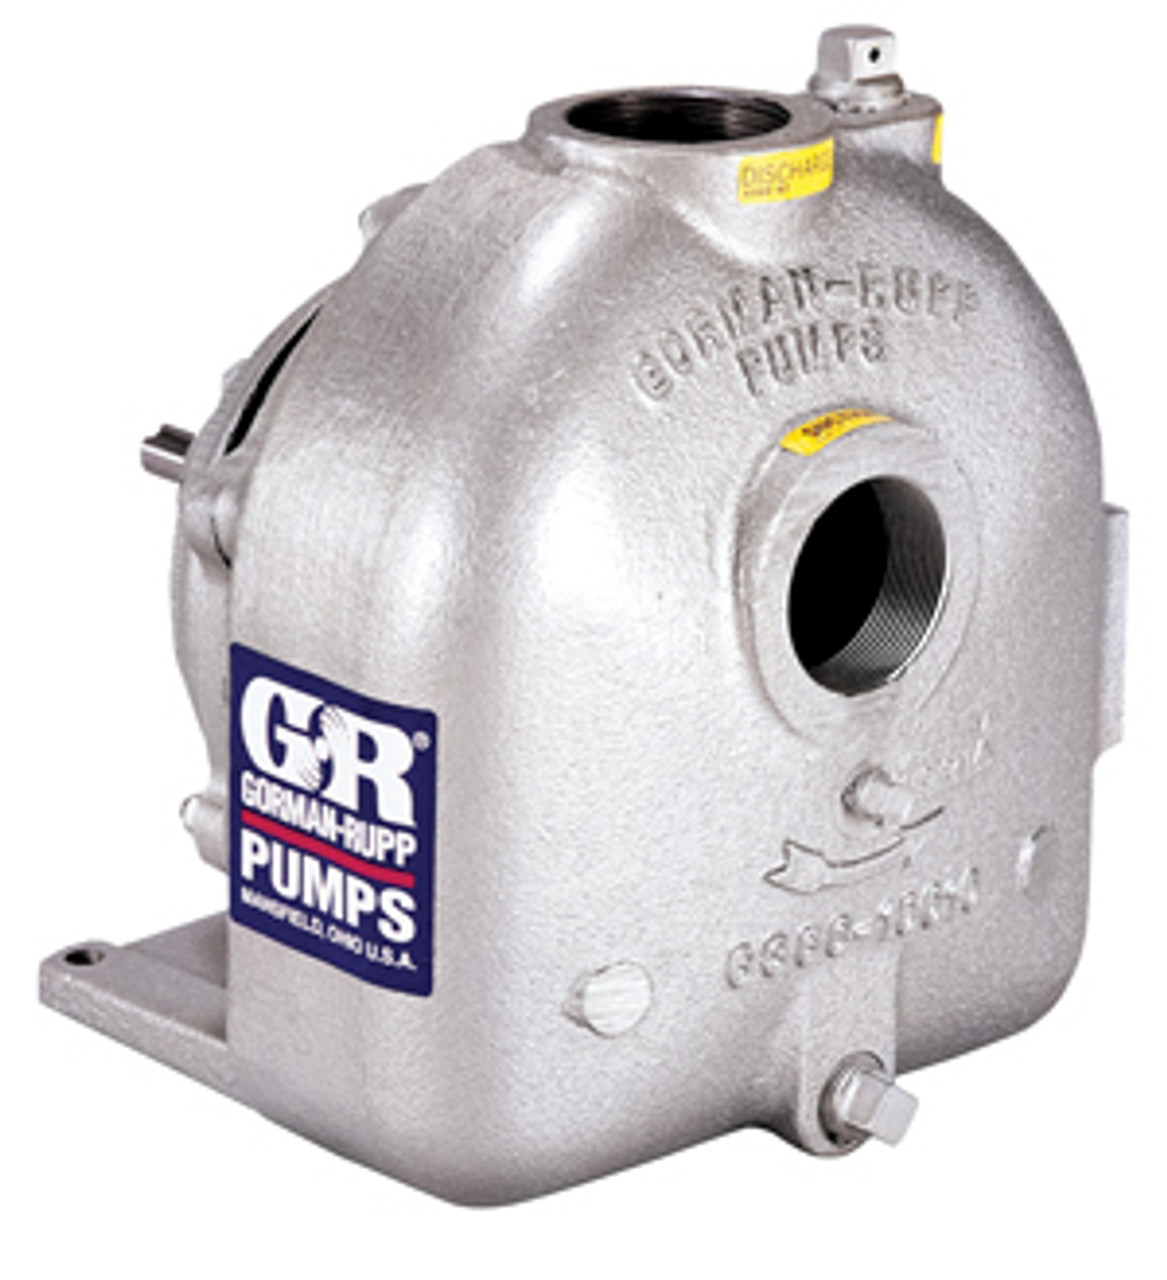 Gorman-Rupp 3 in. O Series Pump 240 GPM - John M. Ellsworth Co. Inc.